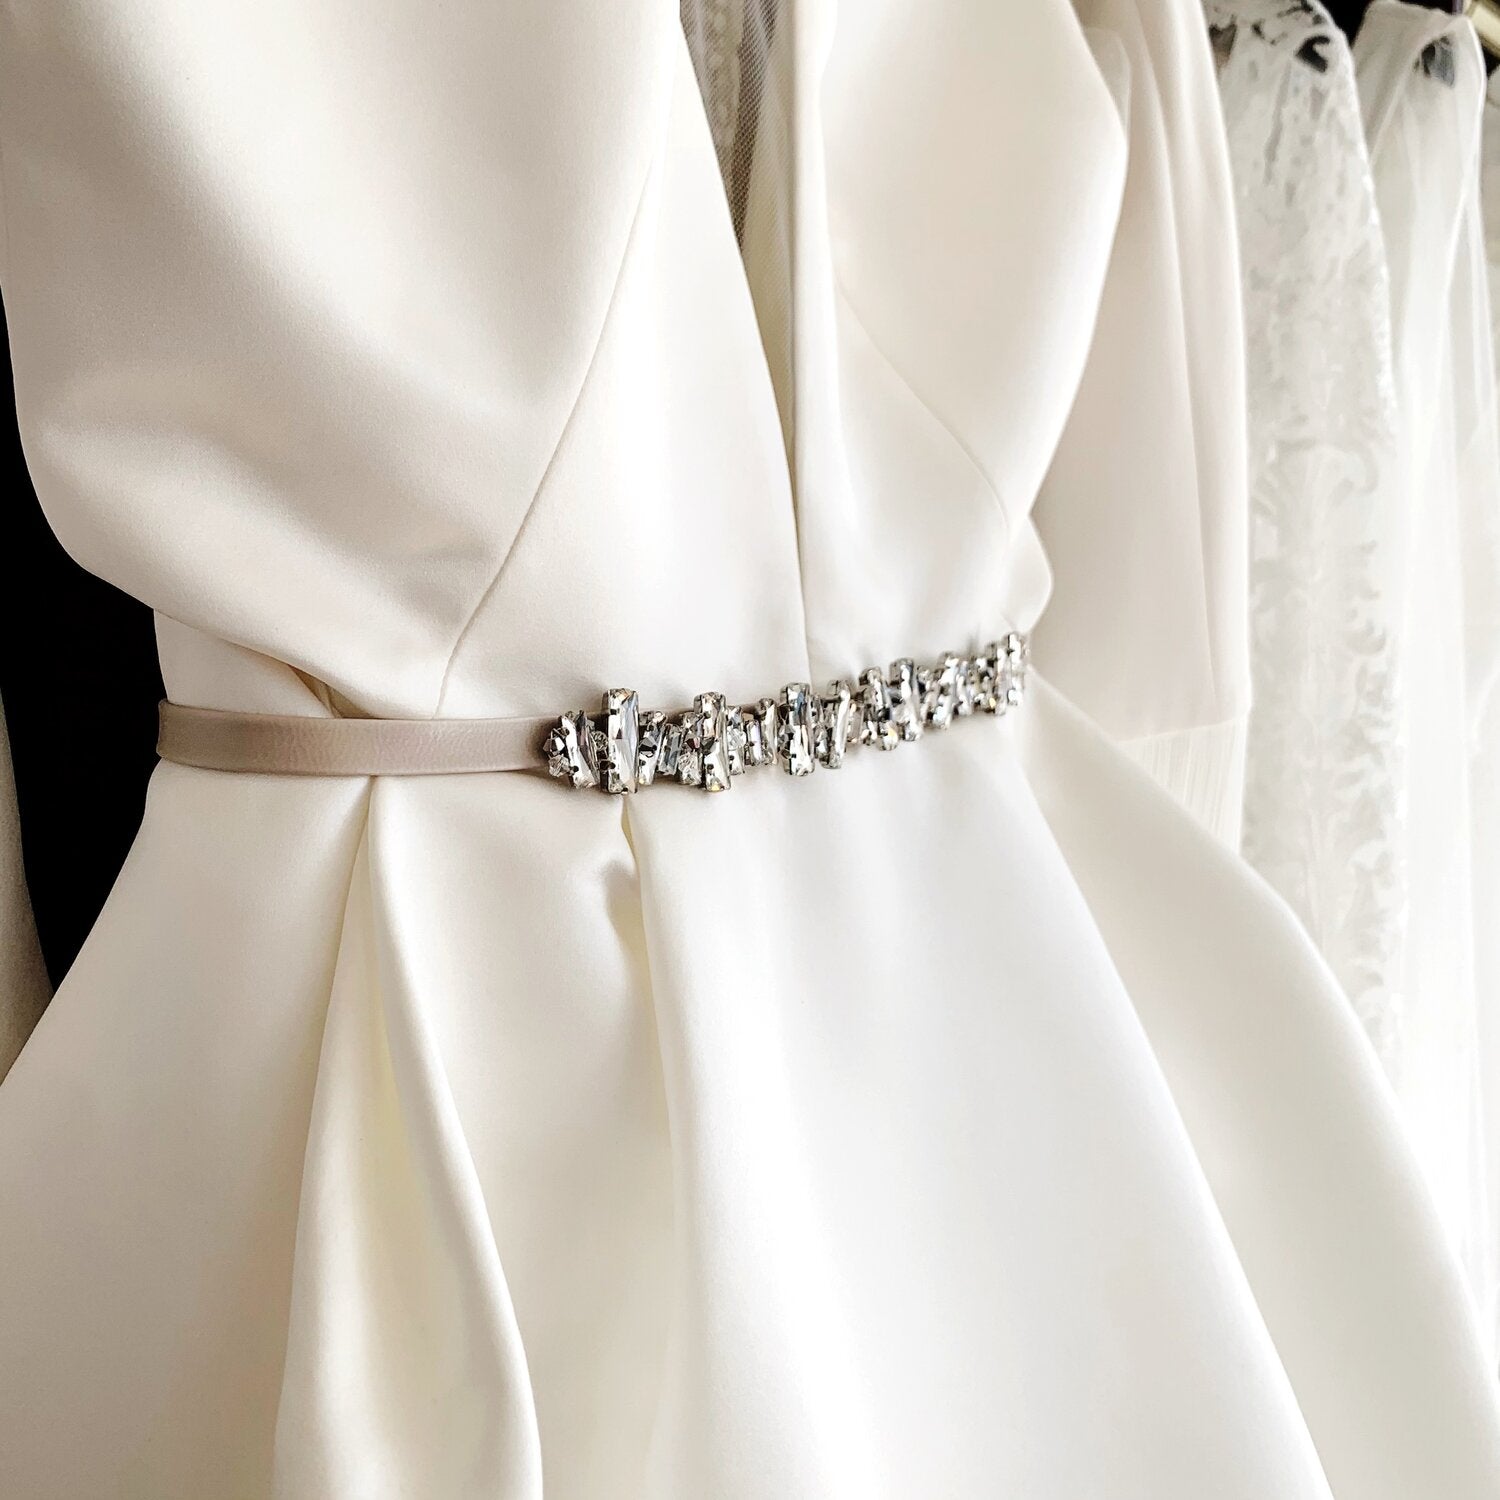 ROXY | Modern Bridal Belt made with crystal shards